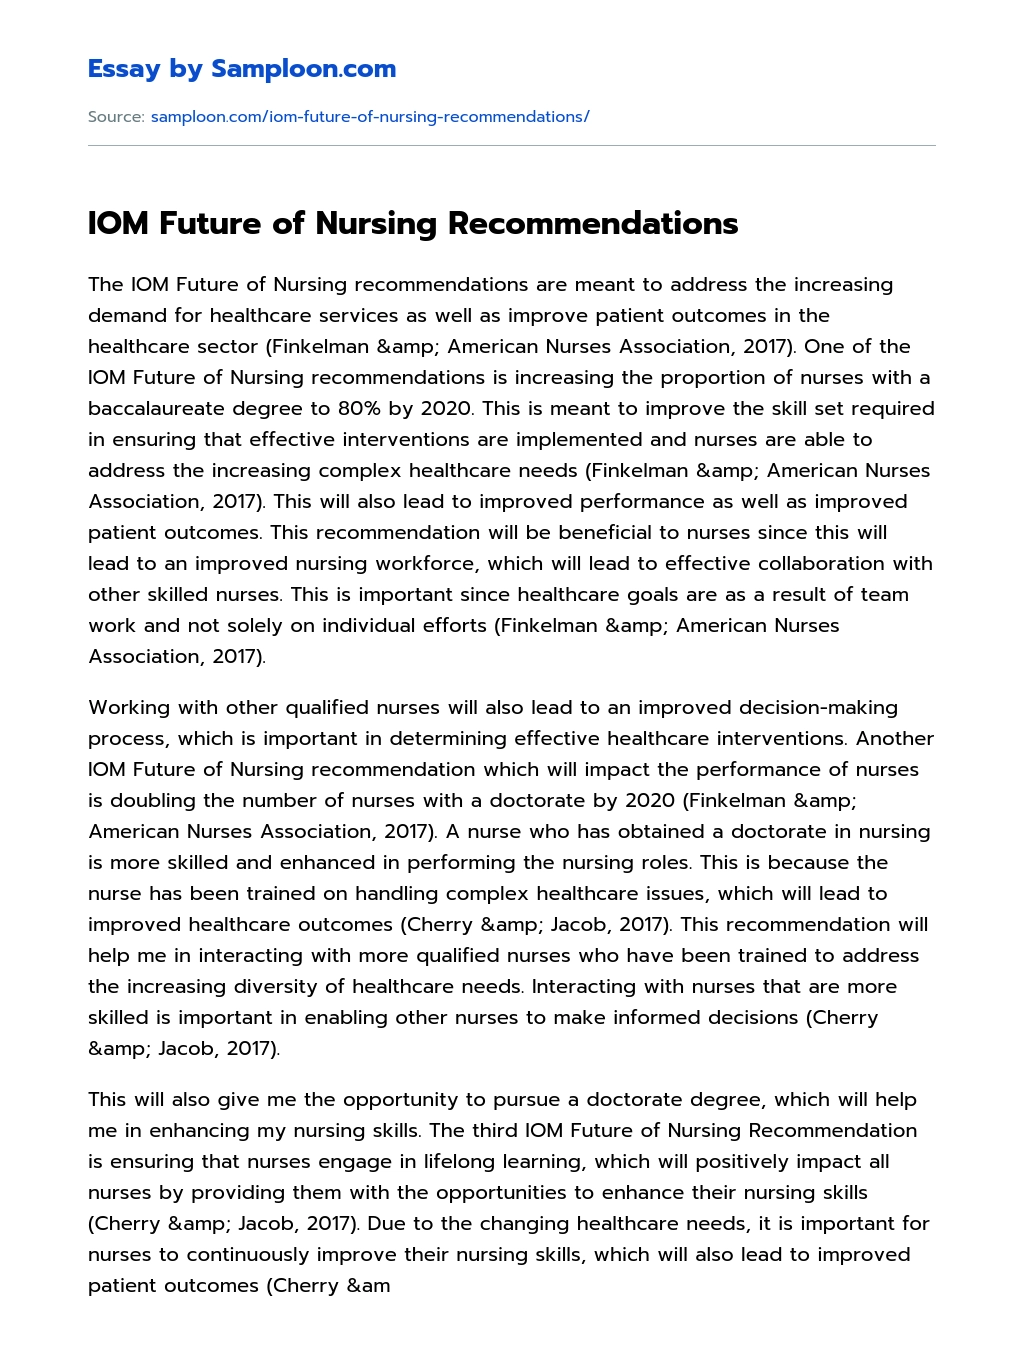 IOM Future of Nursing Recommendations essay